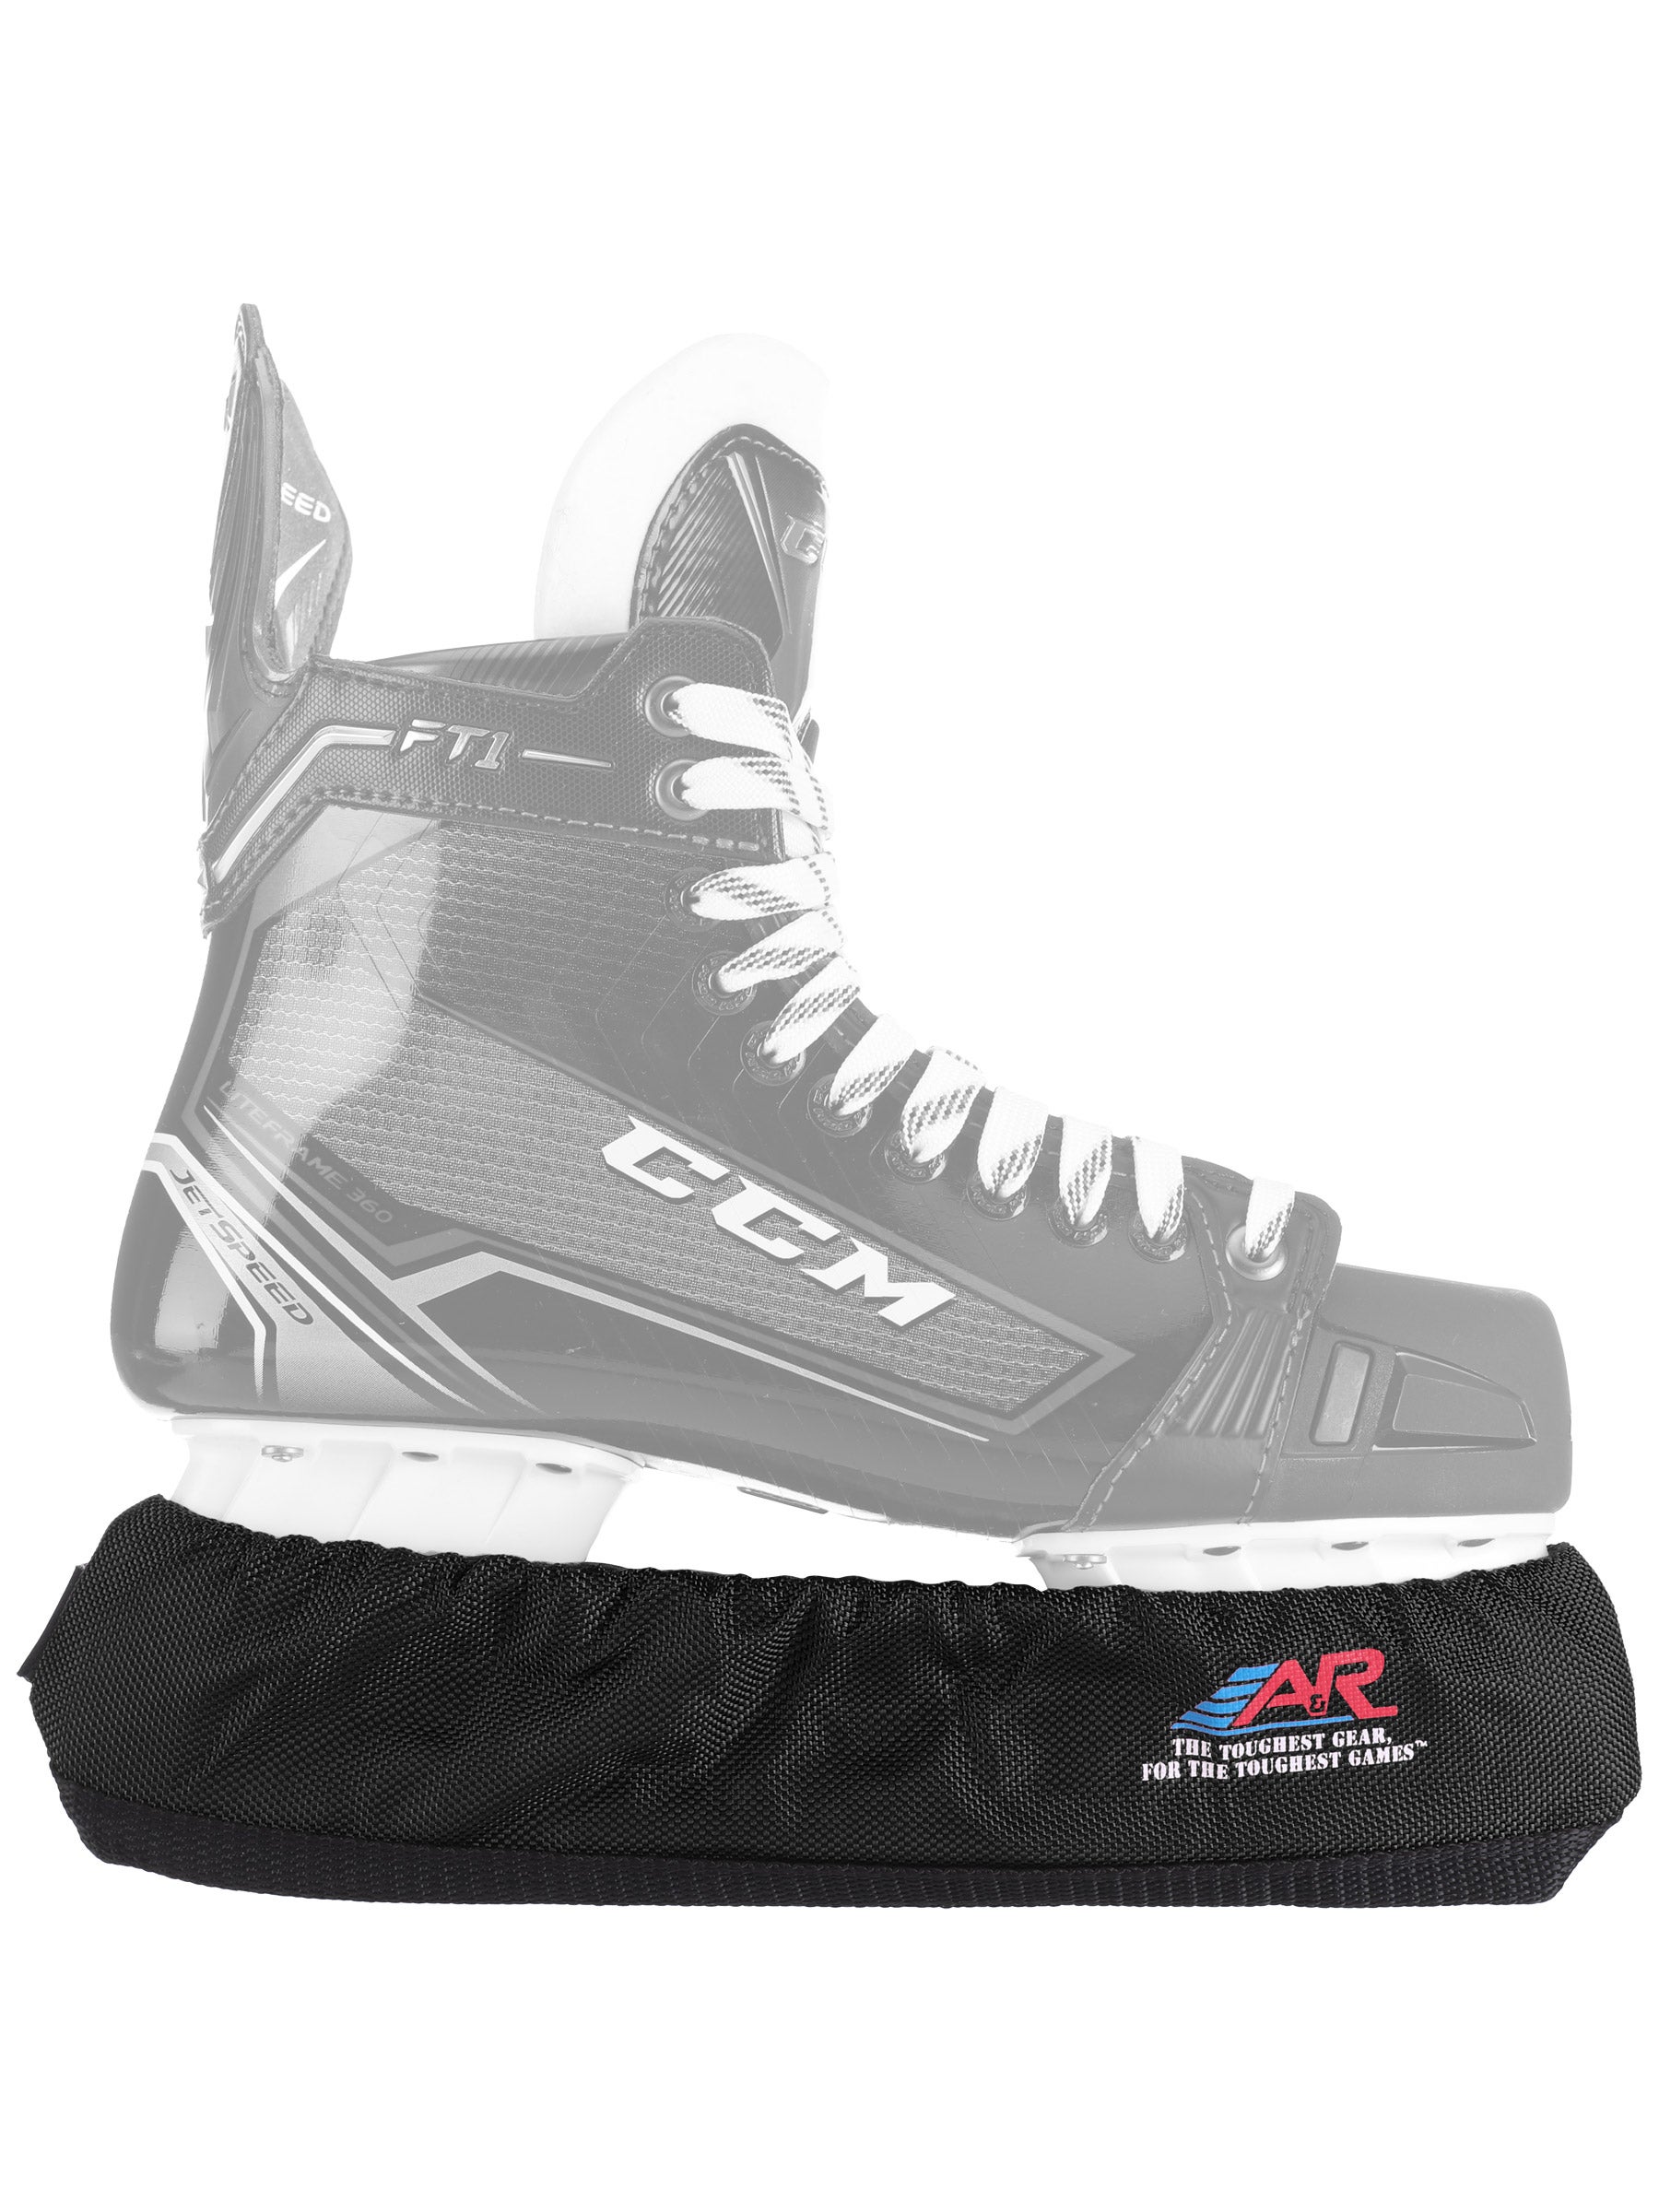 New A & R Ice Skate Blade Covers Black Medium 